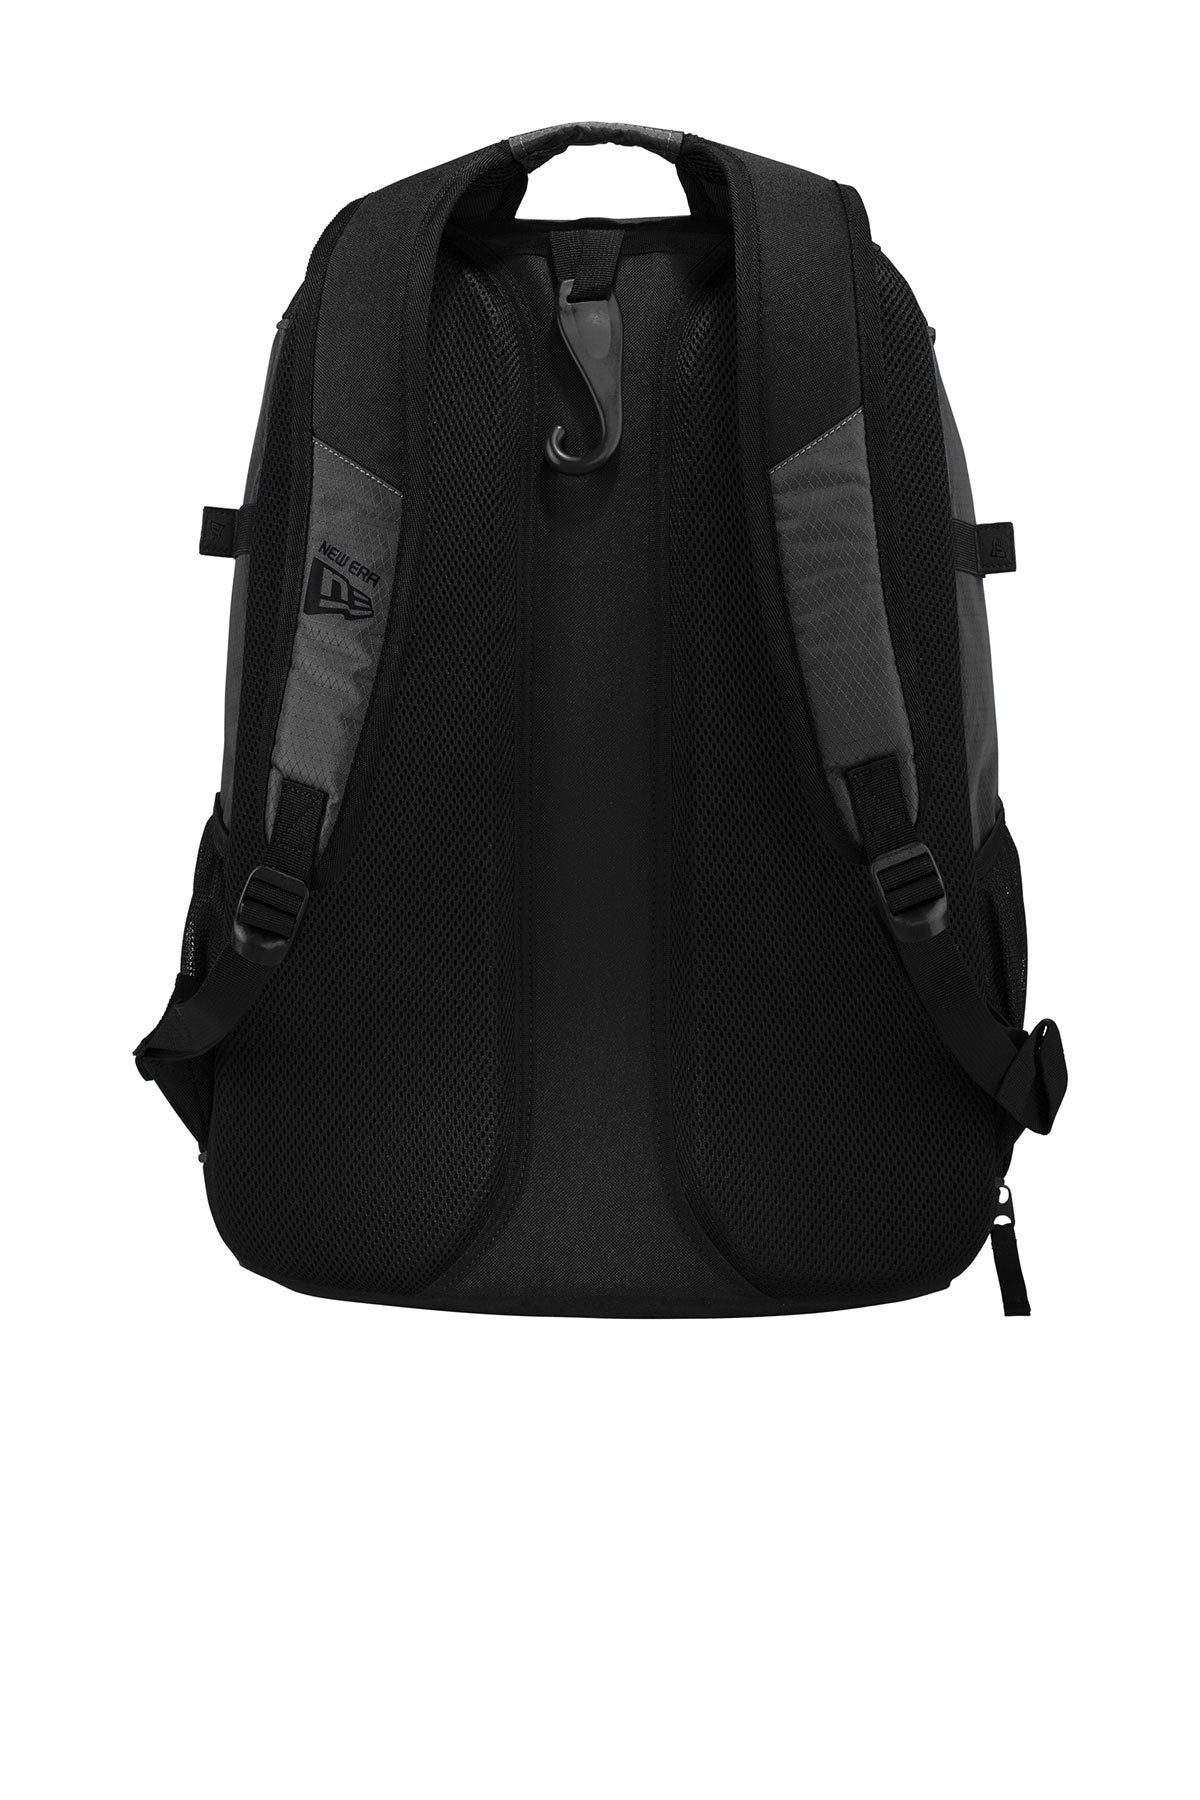 New Era Shutout Custom Backpacks, Graphite Black